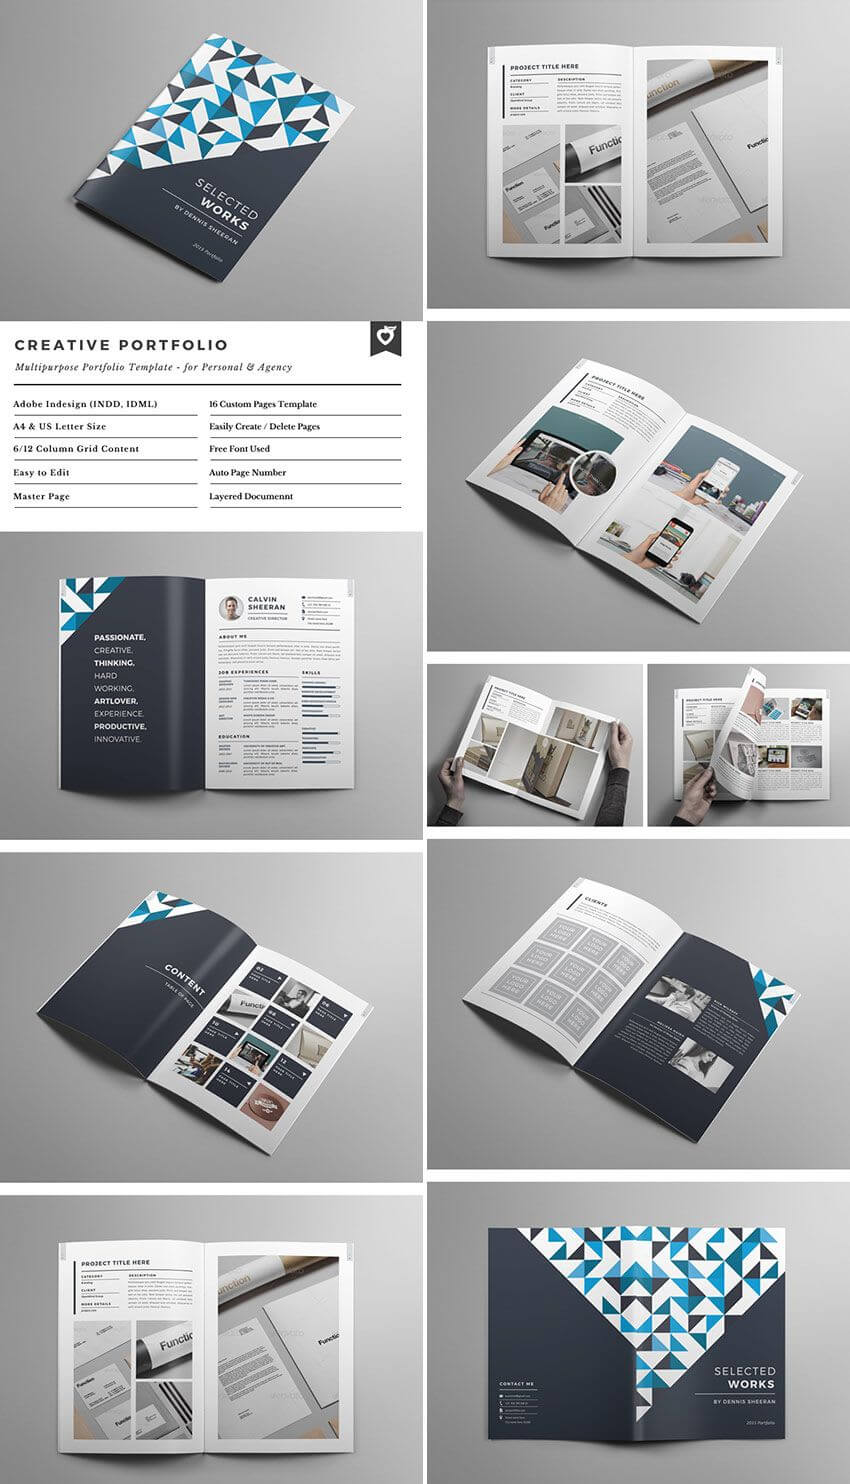 Creative Portfolio Brochure Indd | Resumes And Portfolio With Regard To Adobe Indesign Brochure Templates